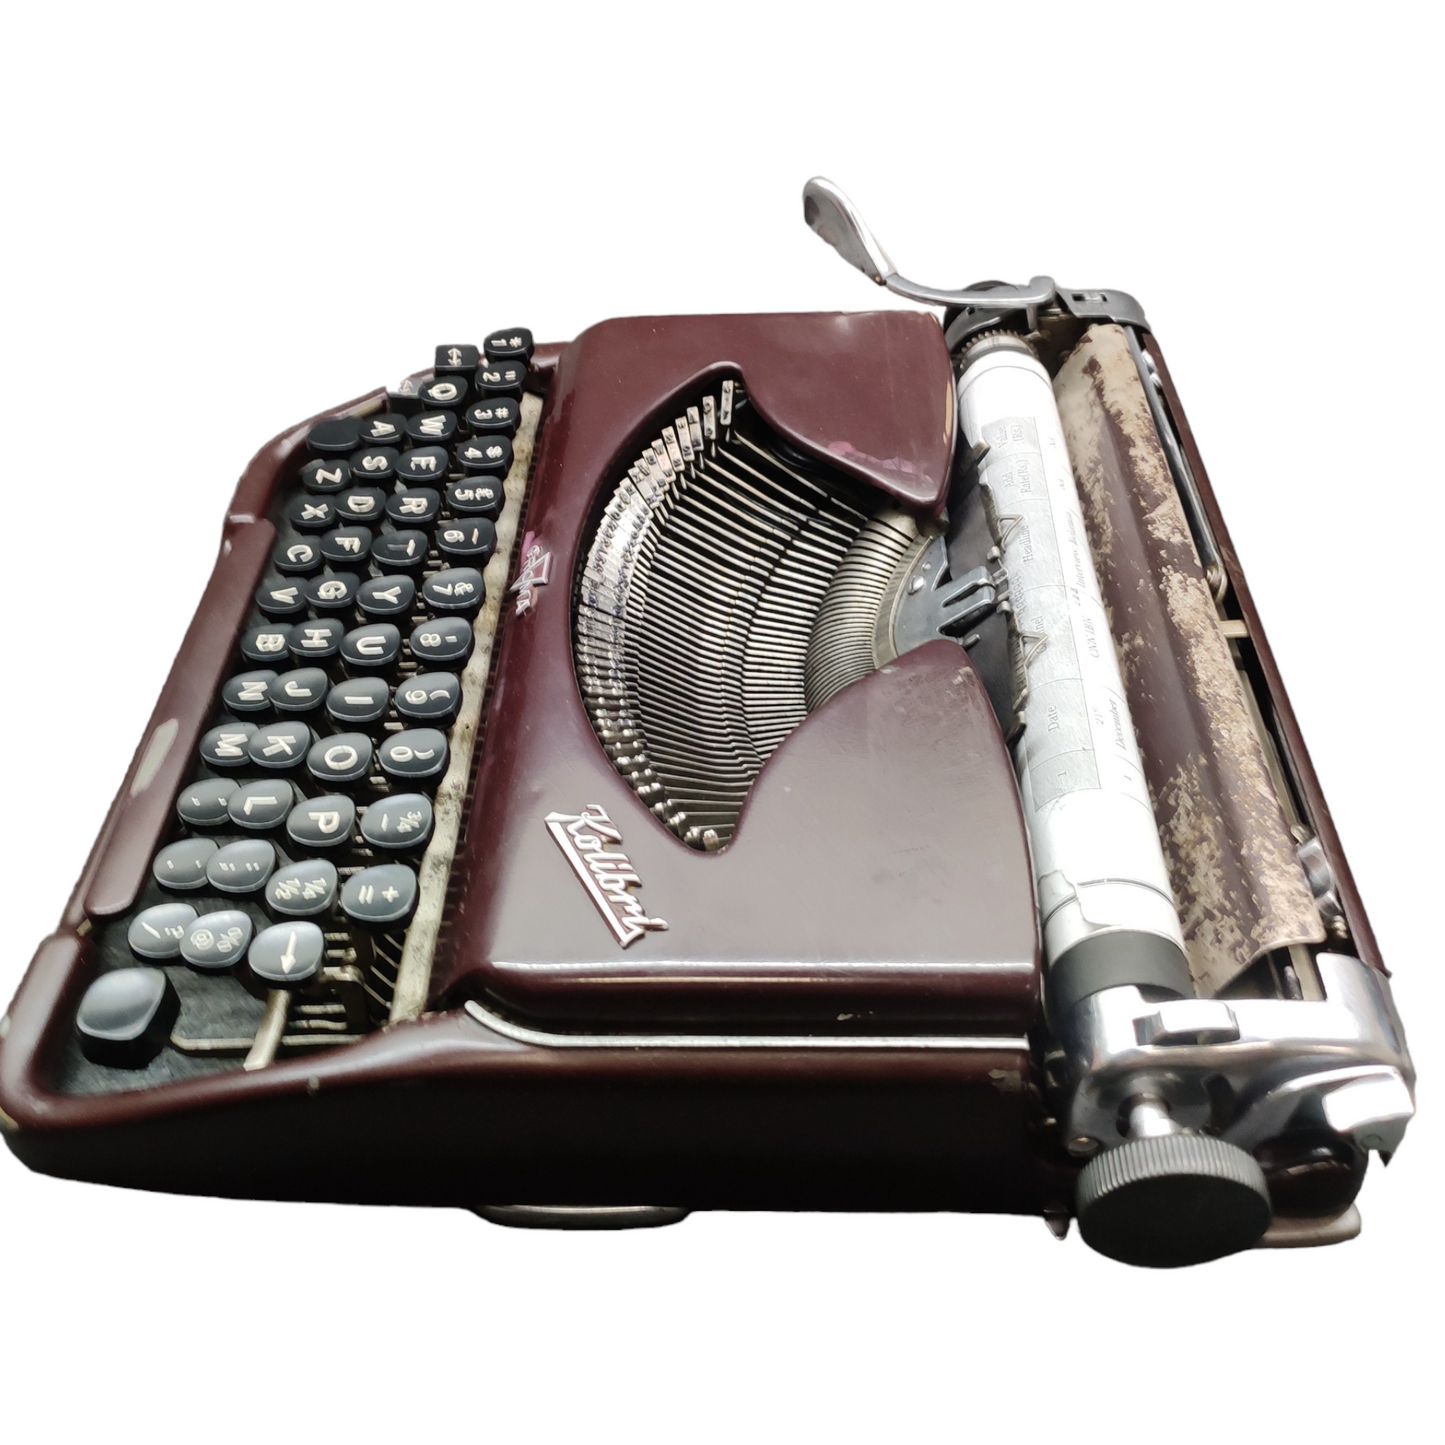 Image of Groma Kolibri Typewriter. Available from universaltypewritercompany.in